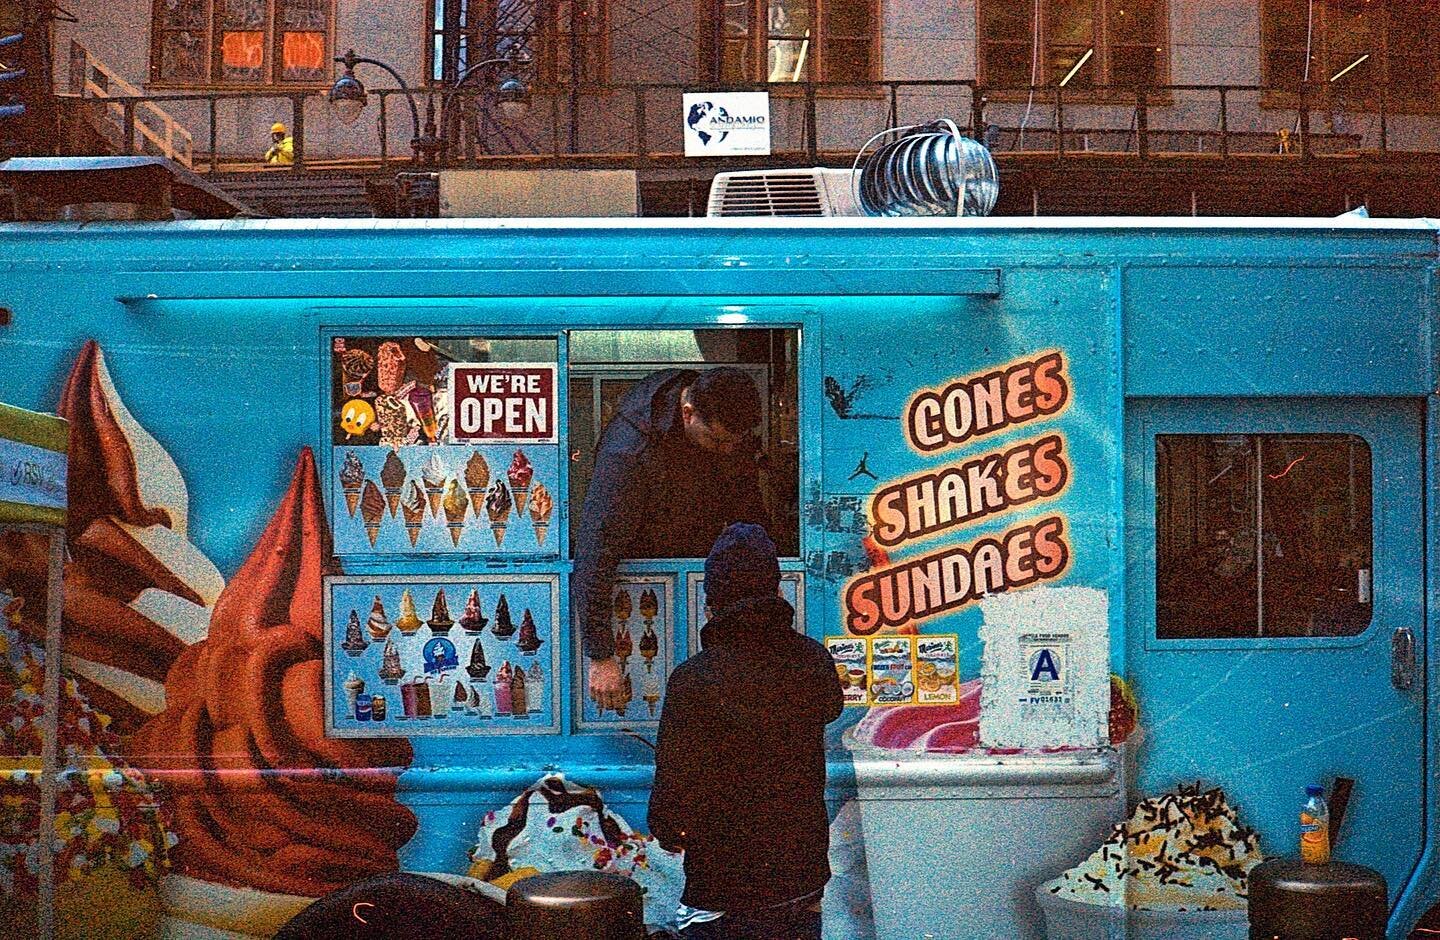 Cones 
Shakes 
Sundae&rsquo;s 

In Manhattan 🗽

📷 Minolta High Matic AF2 
🎞️ KONO! Original Monsoon 35mm

.
.
.
.
.
.
.
.
.
.

#filmisnotdead #filmisalive #dublin  #irish #ireland #analogphotography
#analogfilm  #analogshootersireland
#thedaily35m